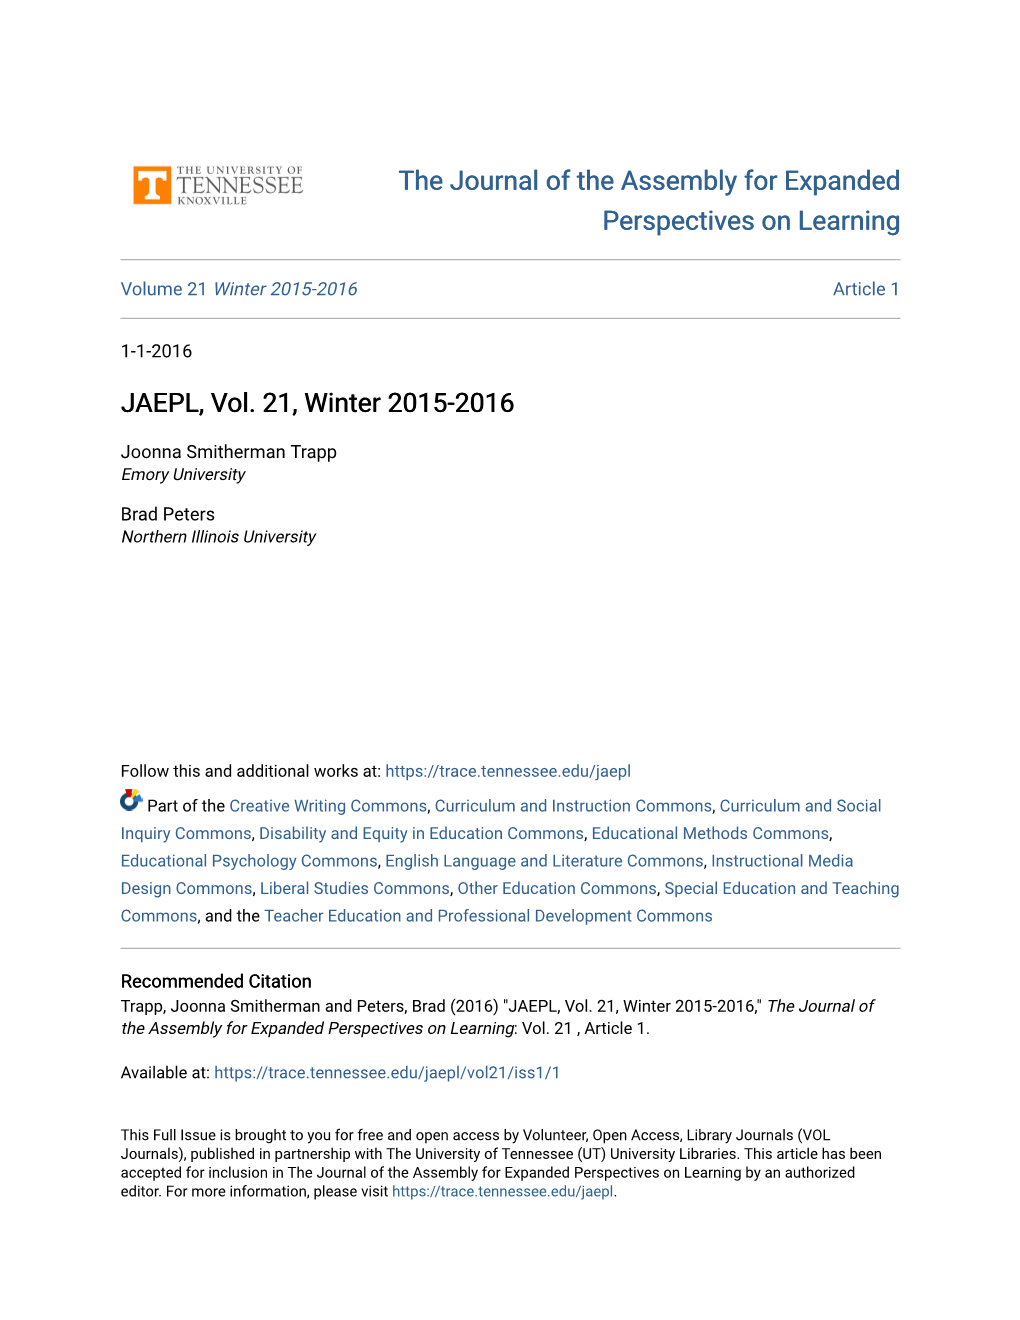 JAEPL, Vol. 21, Winter 2015-2016